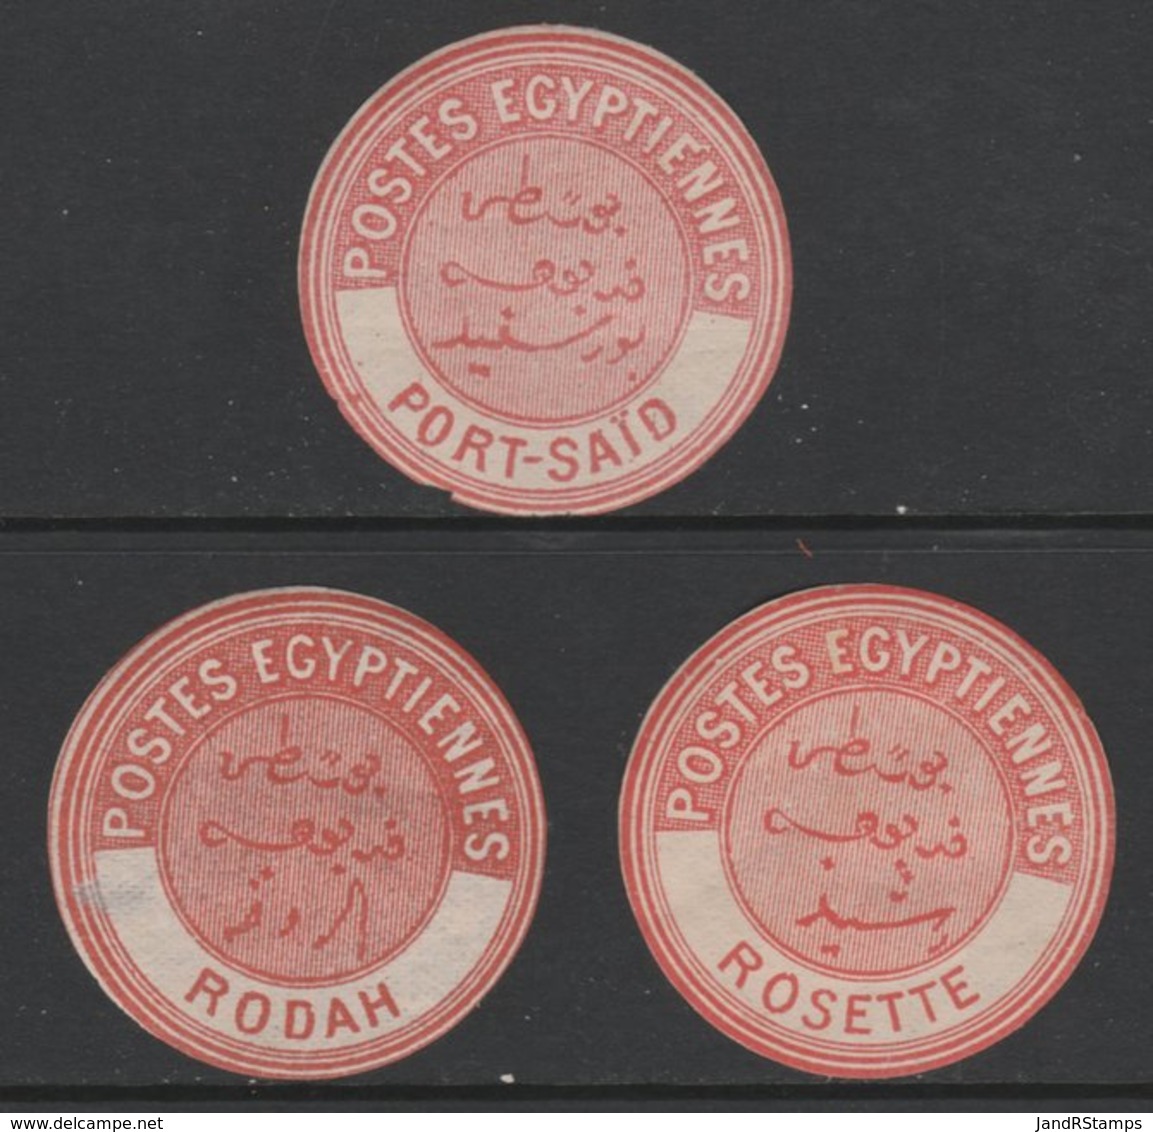 Egypt 1882 Interpostal Seal S For PORT-SAID, RODAH & ROSETTE (Kehr Type 8A Nos 699, 704 & 705) Fine Mint Virtually Unmou - 1866-1914 Khedivate Of Egypt